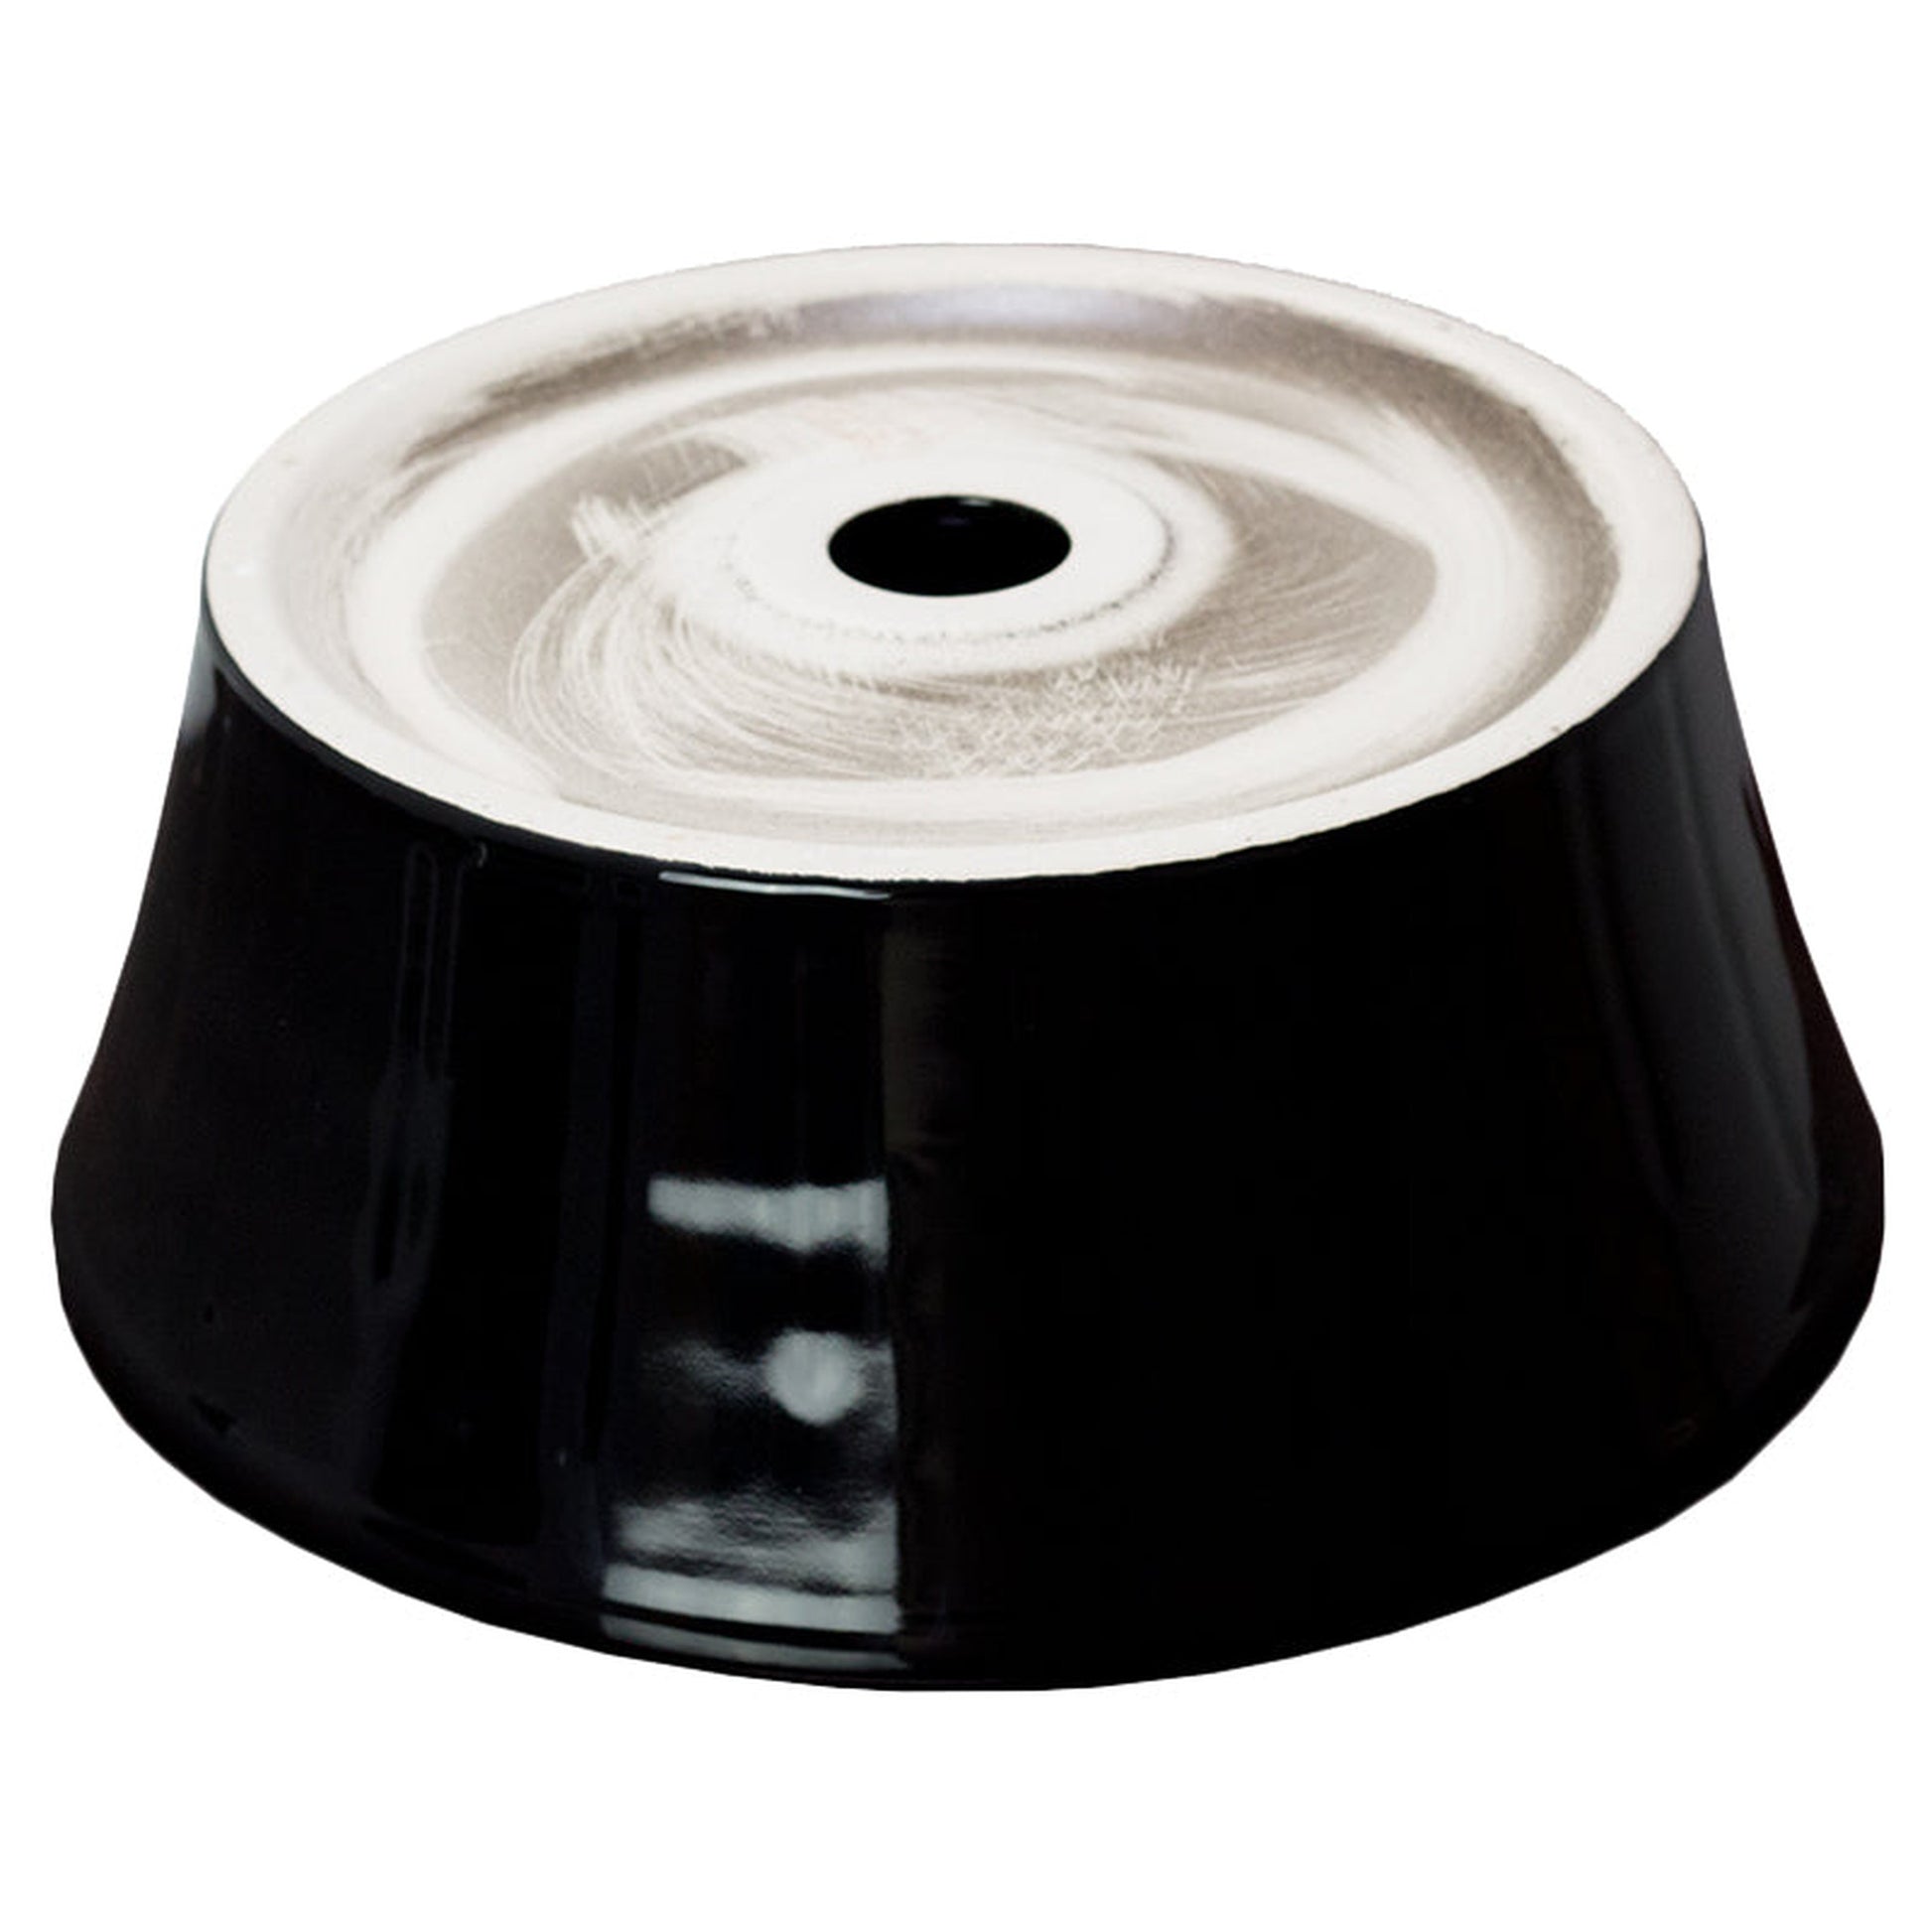 American Imaginations AI-27896 Round Black Ceramic Bathroom Vessel Sink with Enamel Glaze Finish